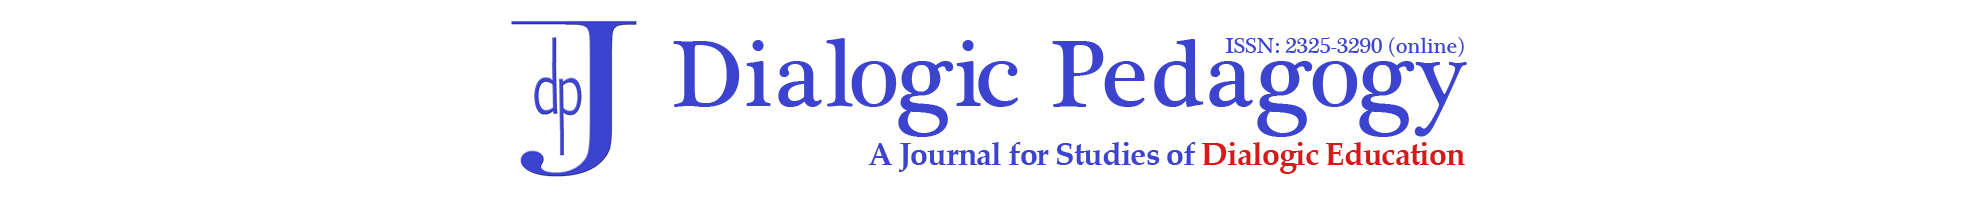 Dialogic Pedagogy: A Journal for Studies of Dialogic Education